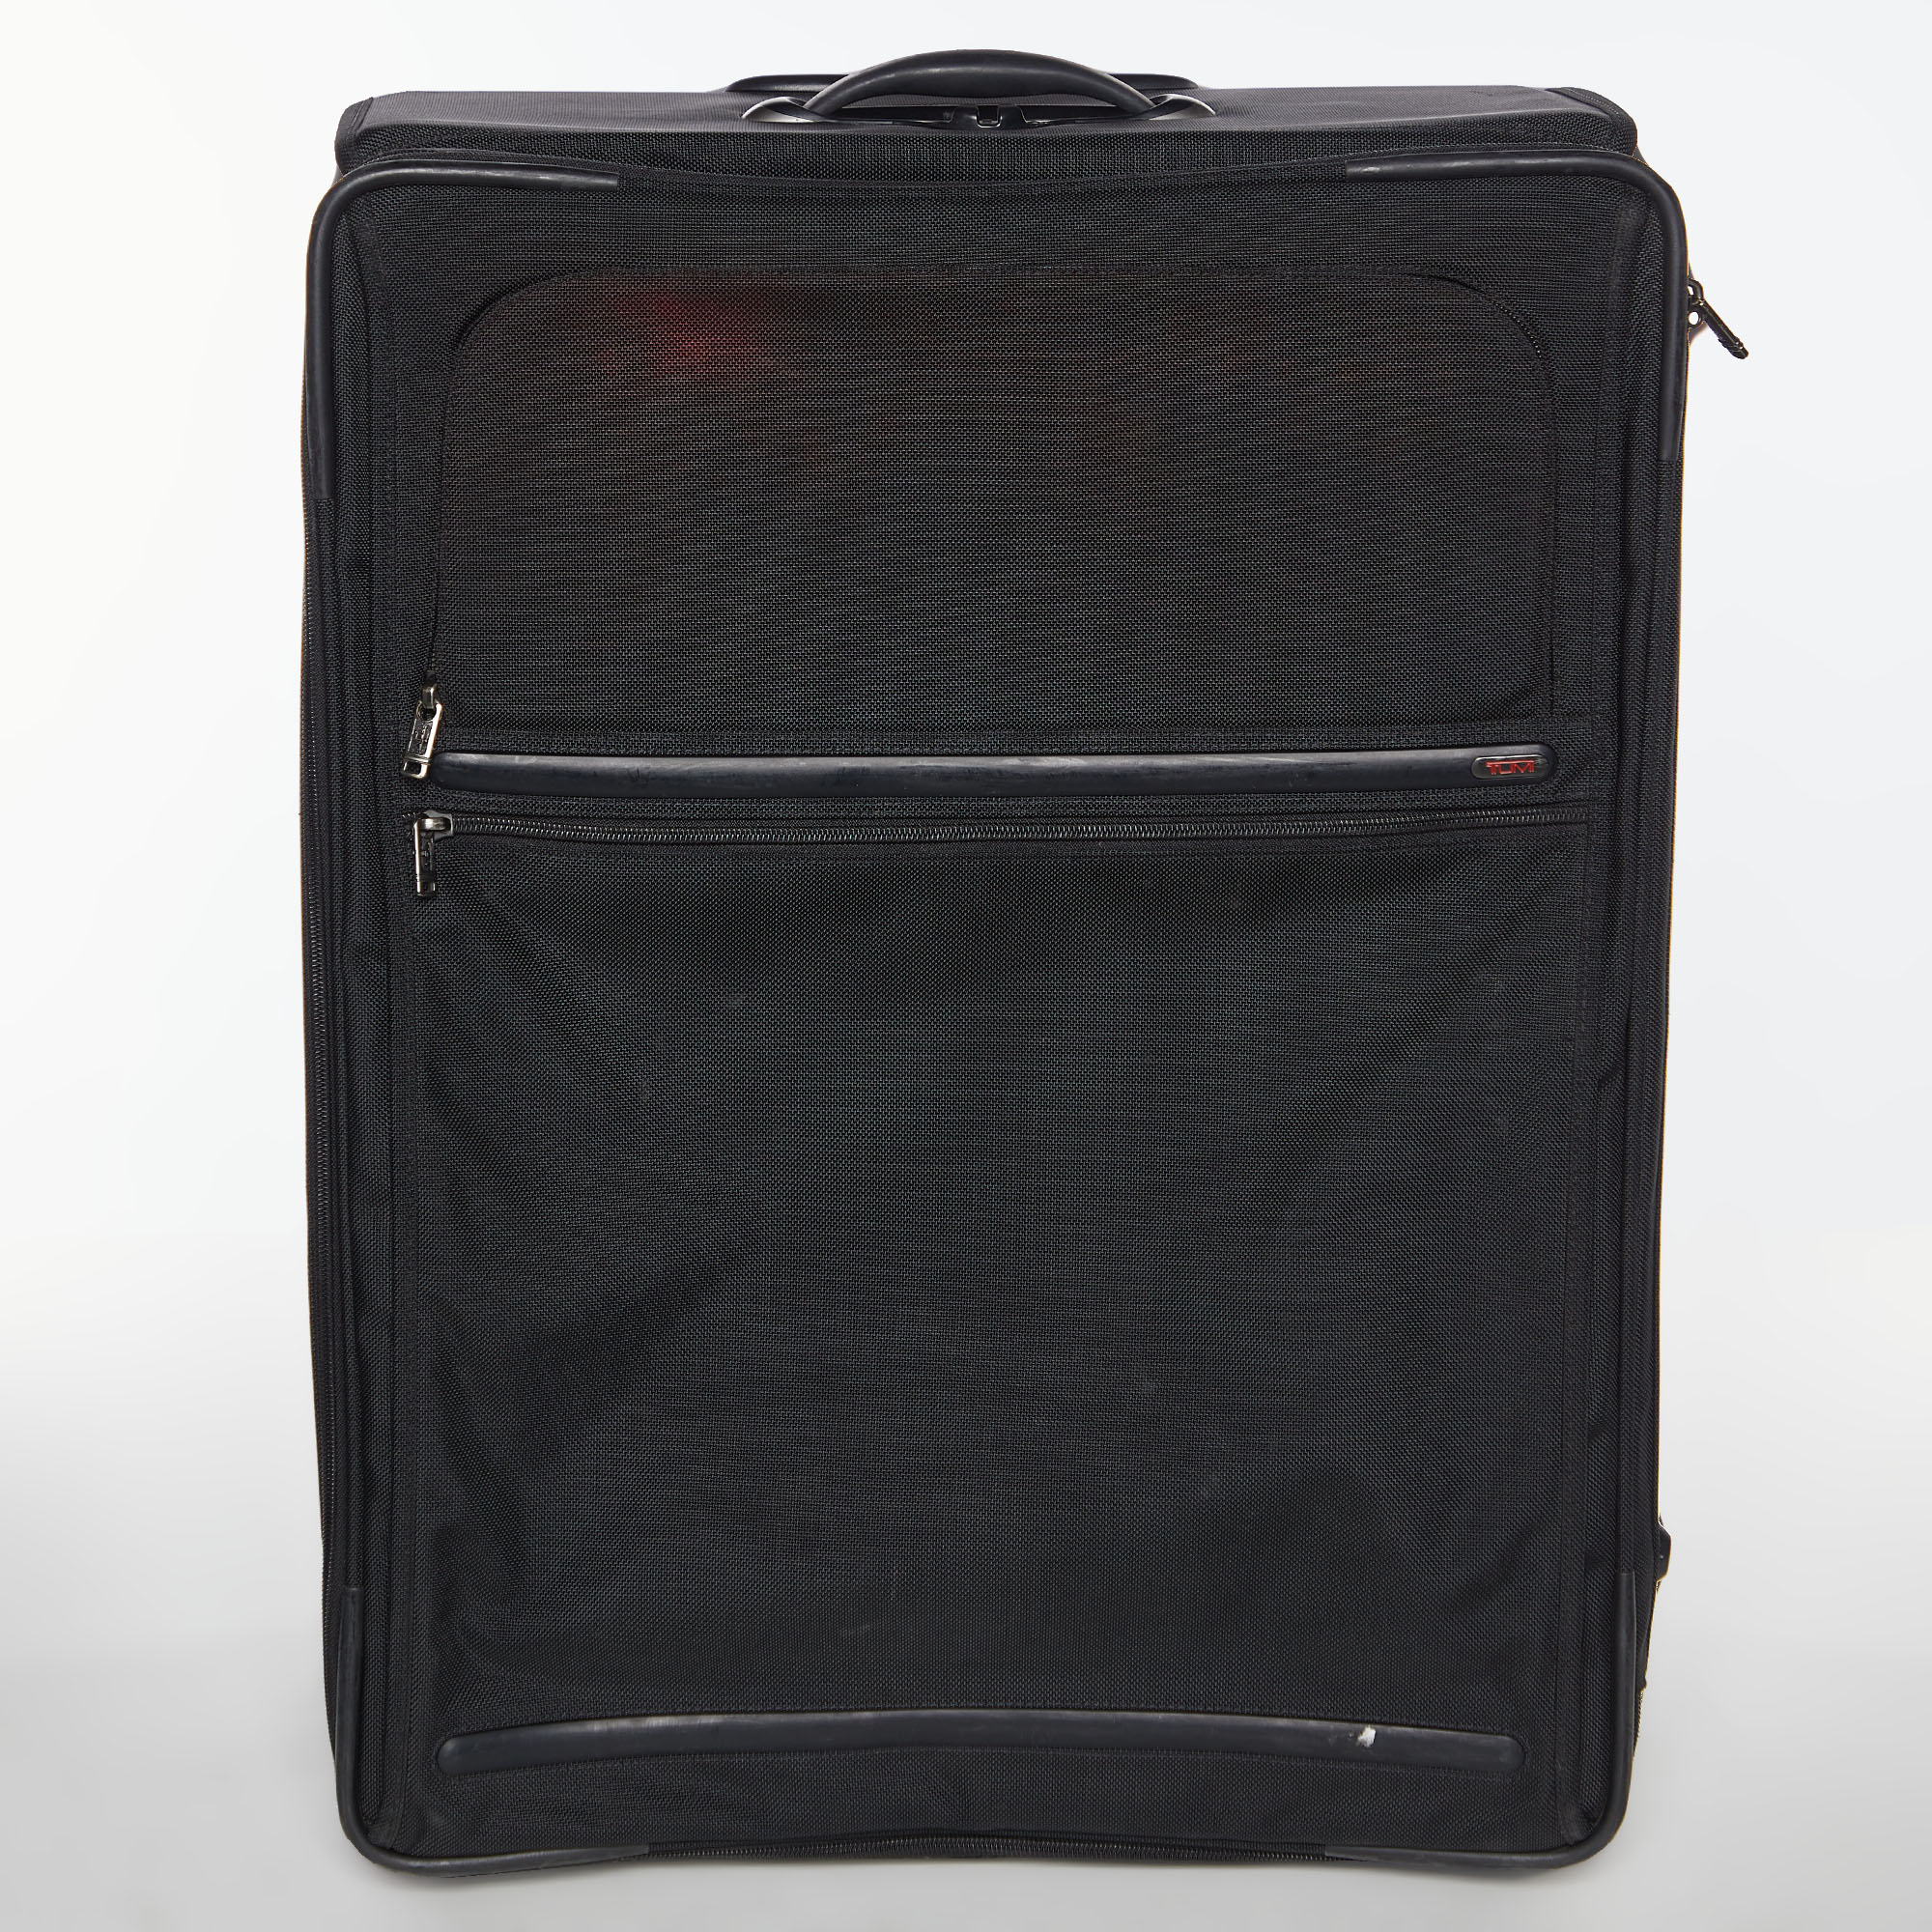 Pre-owned Tumi Black Nylon 2 Wheeled Alpha Expandable Luggage